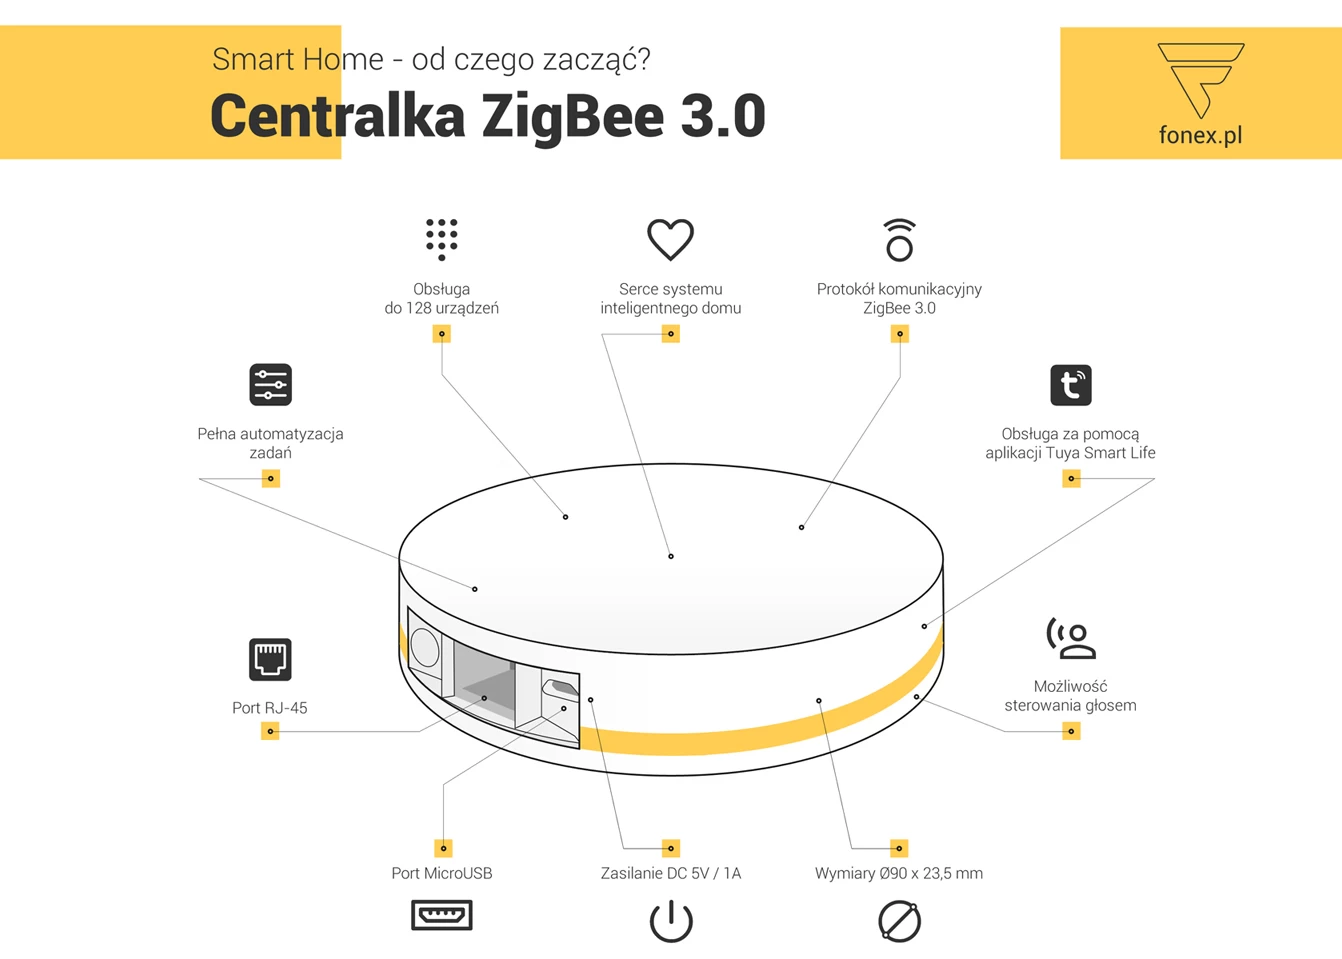 Centralka ZigBee 3.0 - serce systemu SMART HOME - sprawdź na fonex.pl!